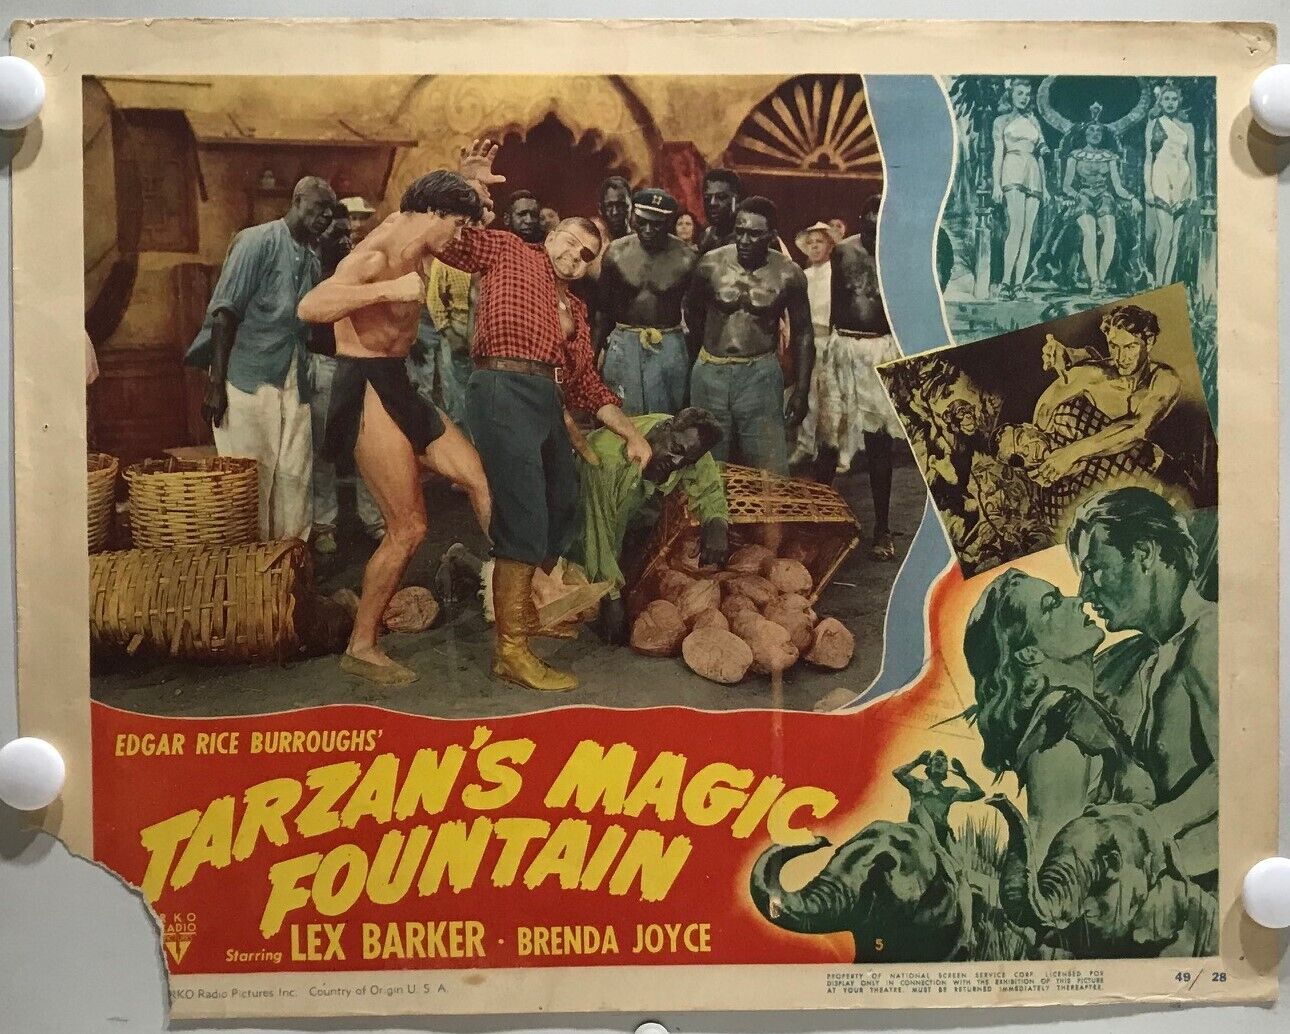 ORIGINAL LOBBY CARD - TARZAN'S MAGIC FOUNTAIN (b) - 1949 - title card